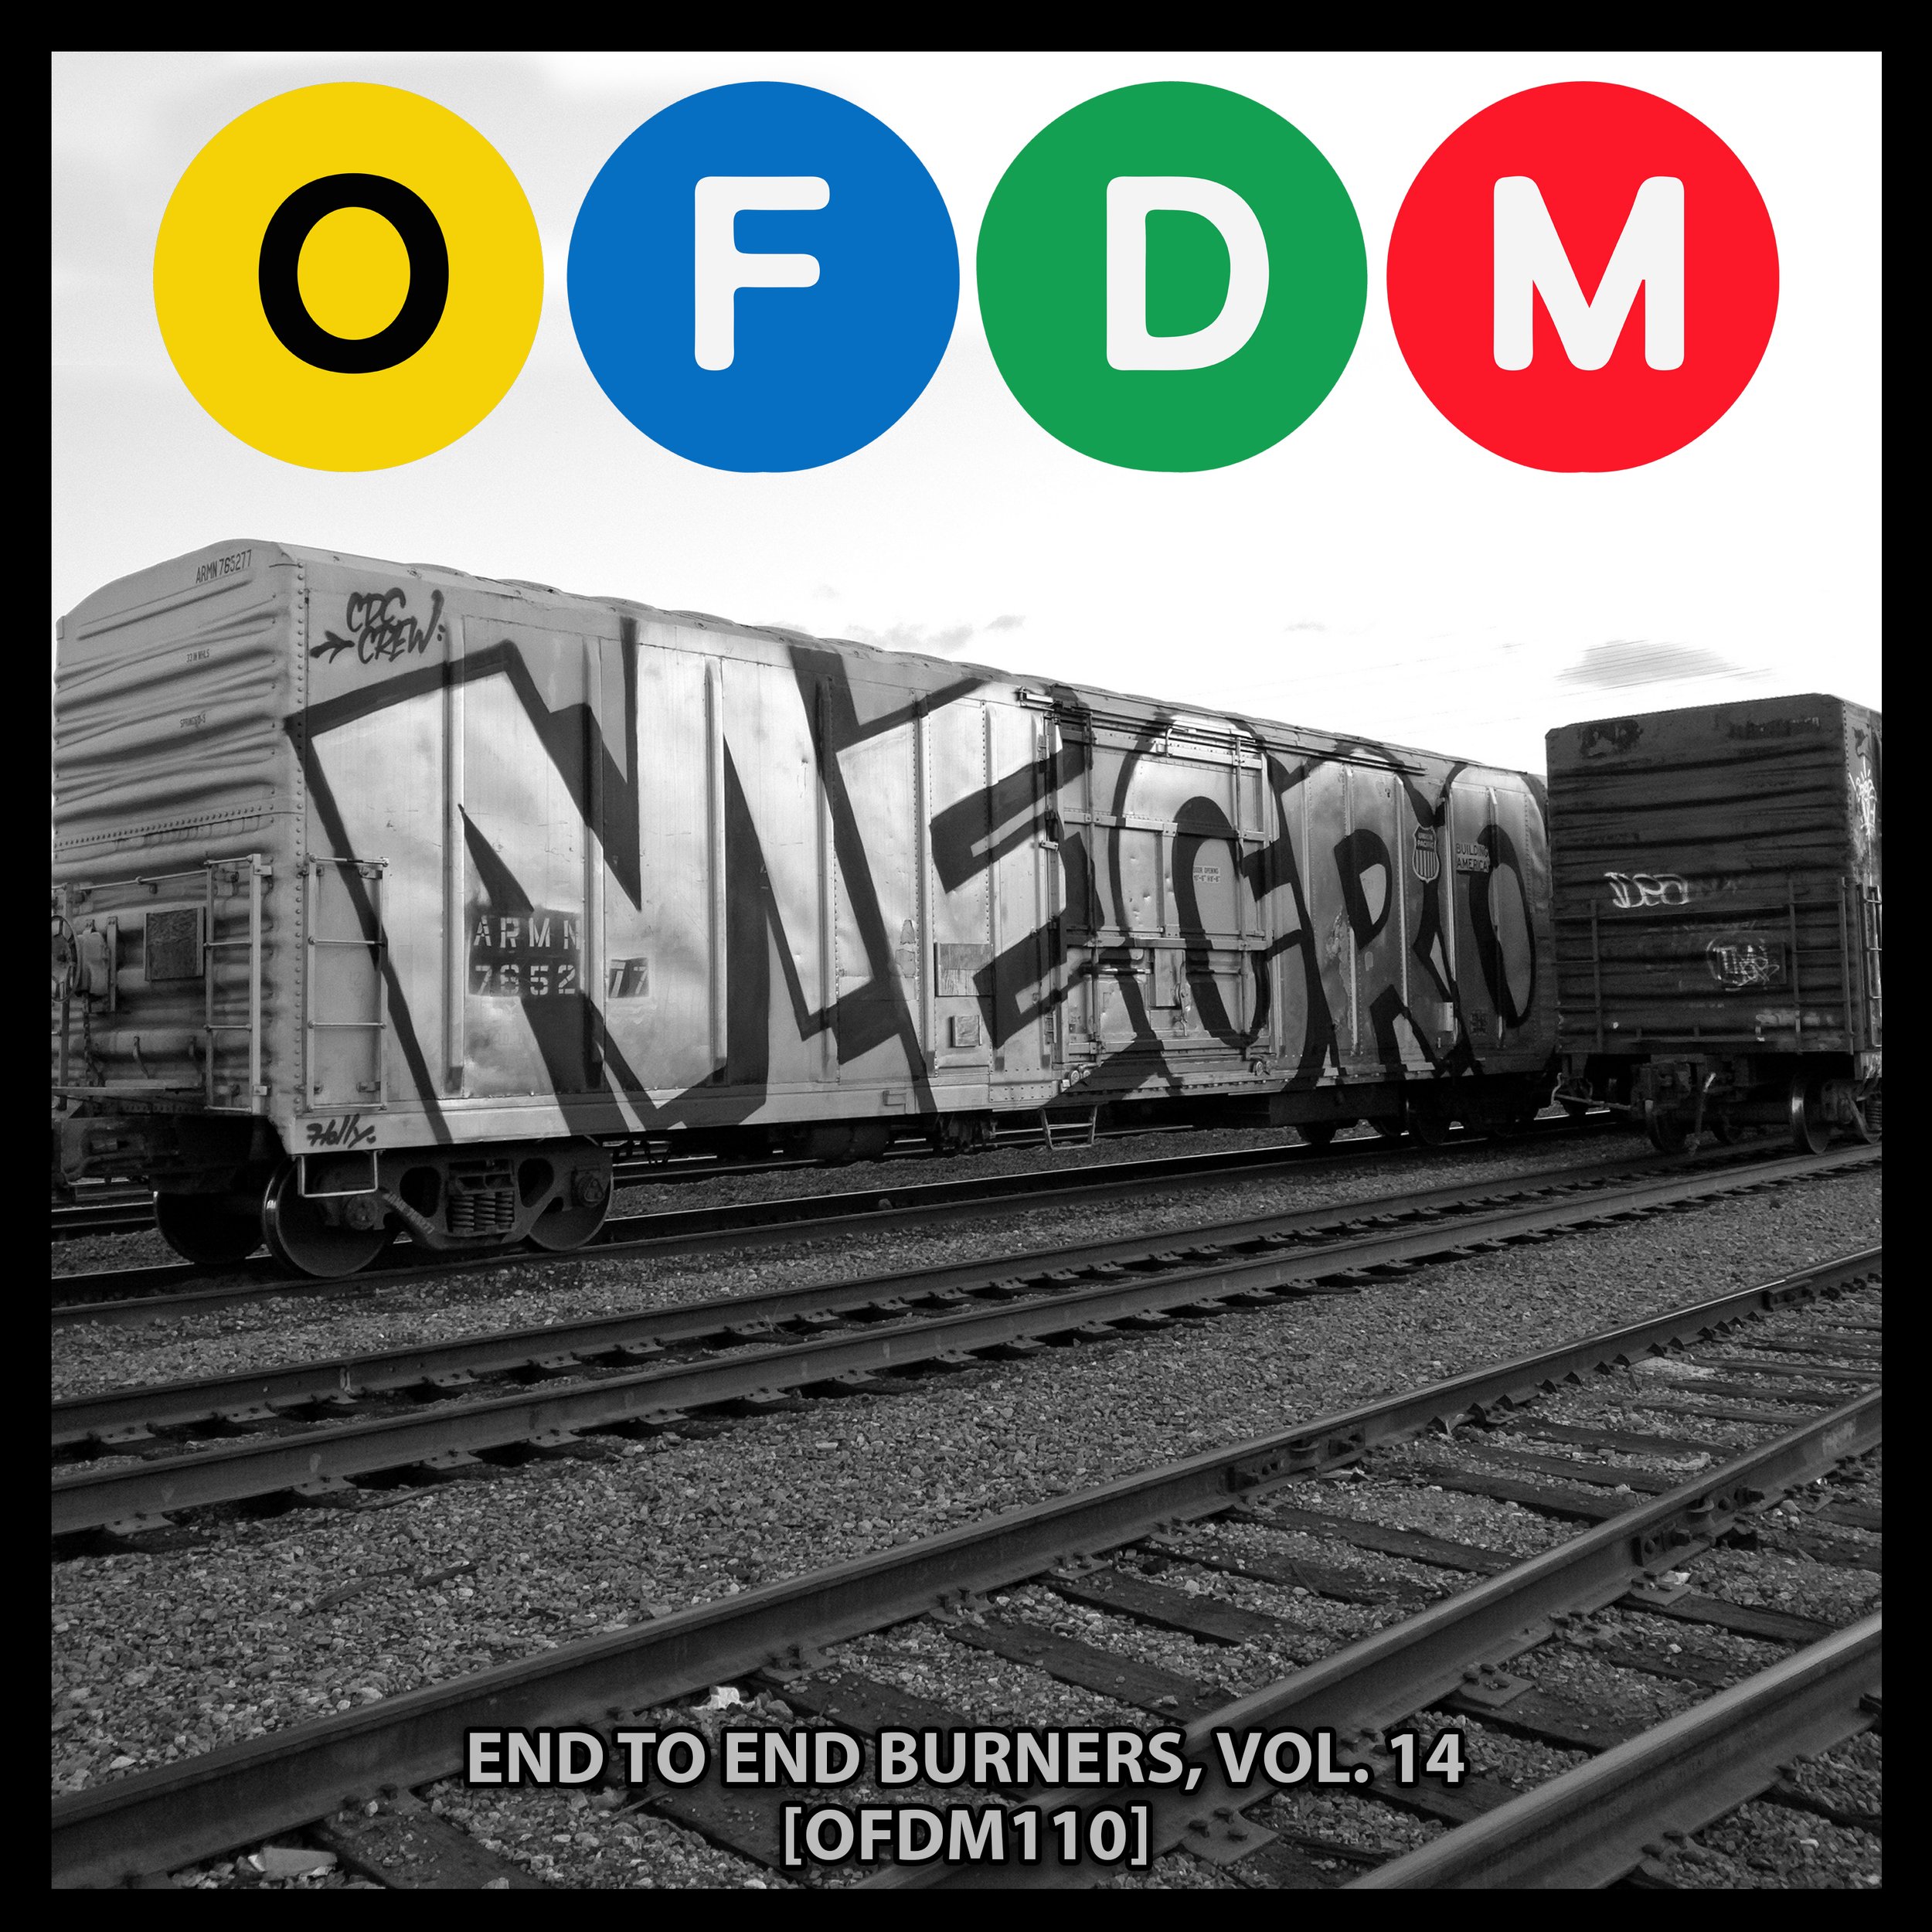 [OFDM110] VA - End To End Burners, Vol. 14 (ARTWORK).jpg